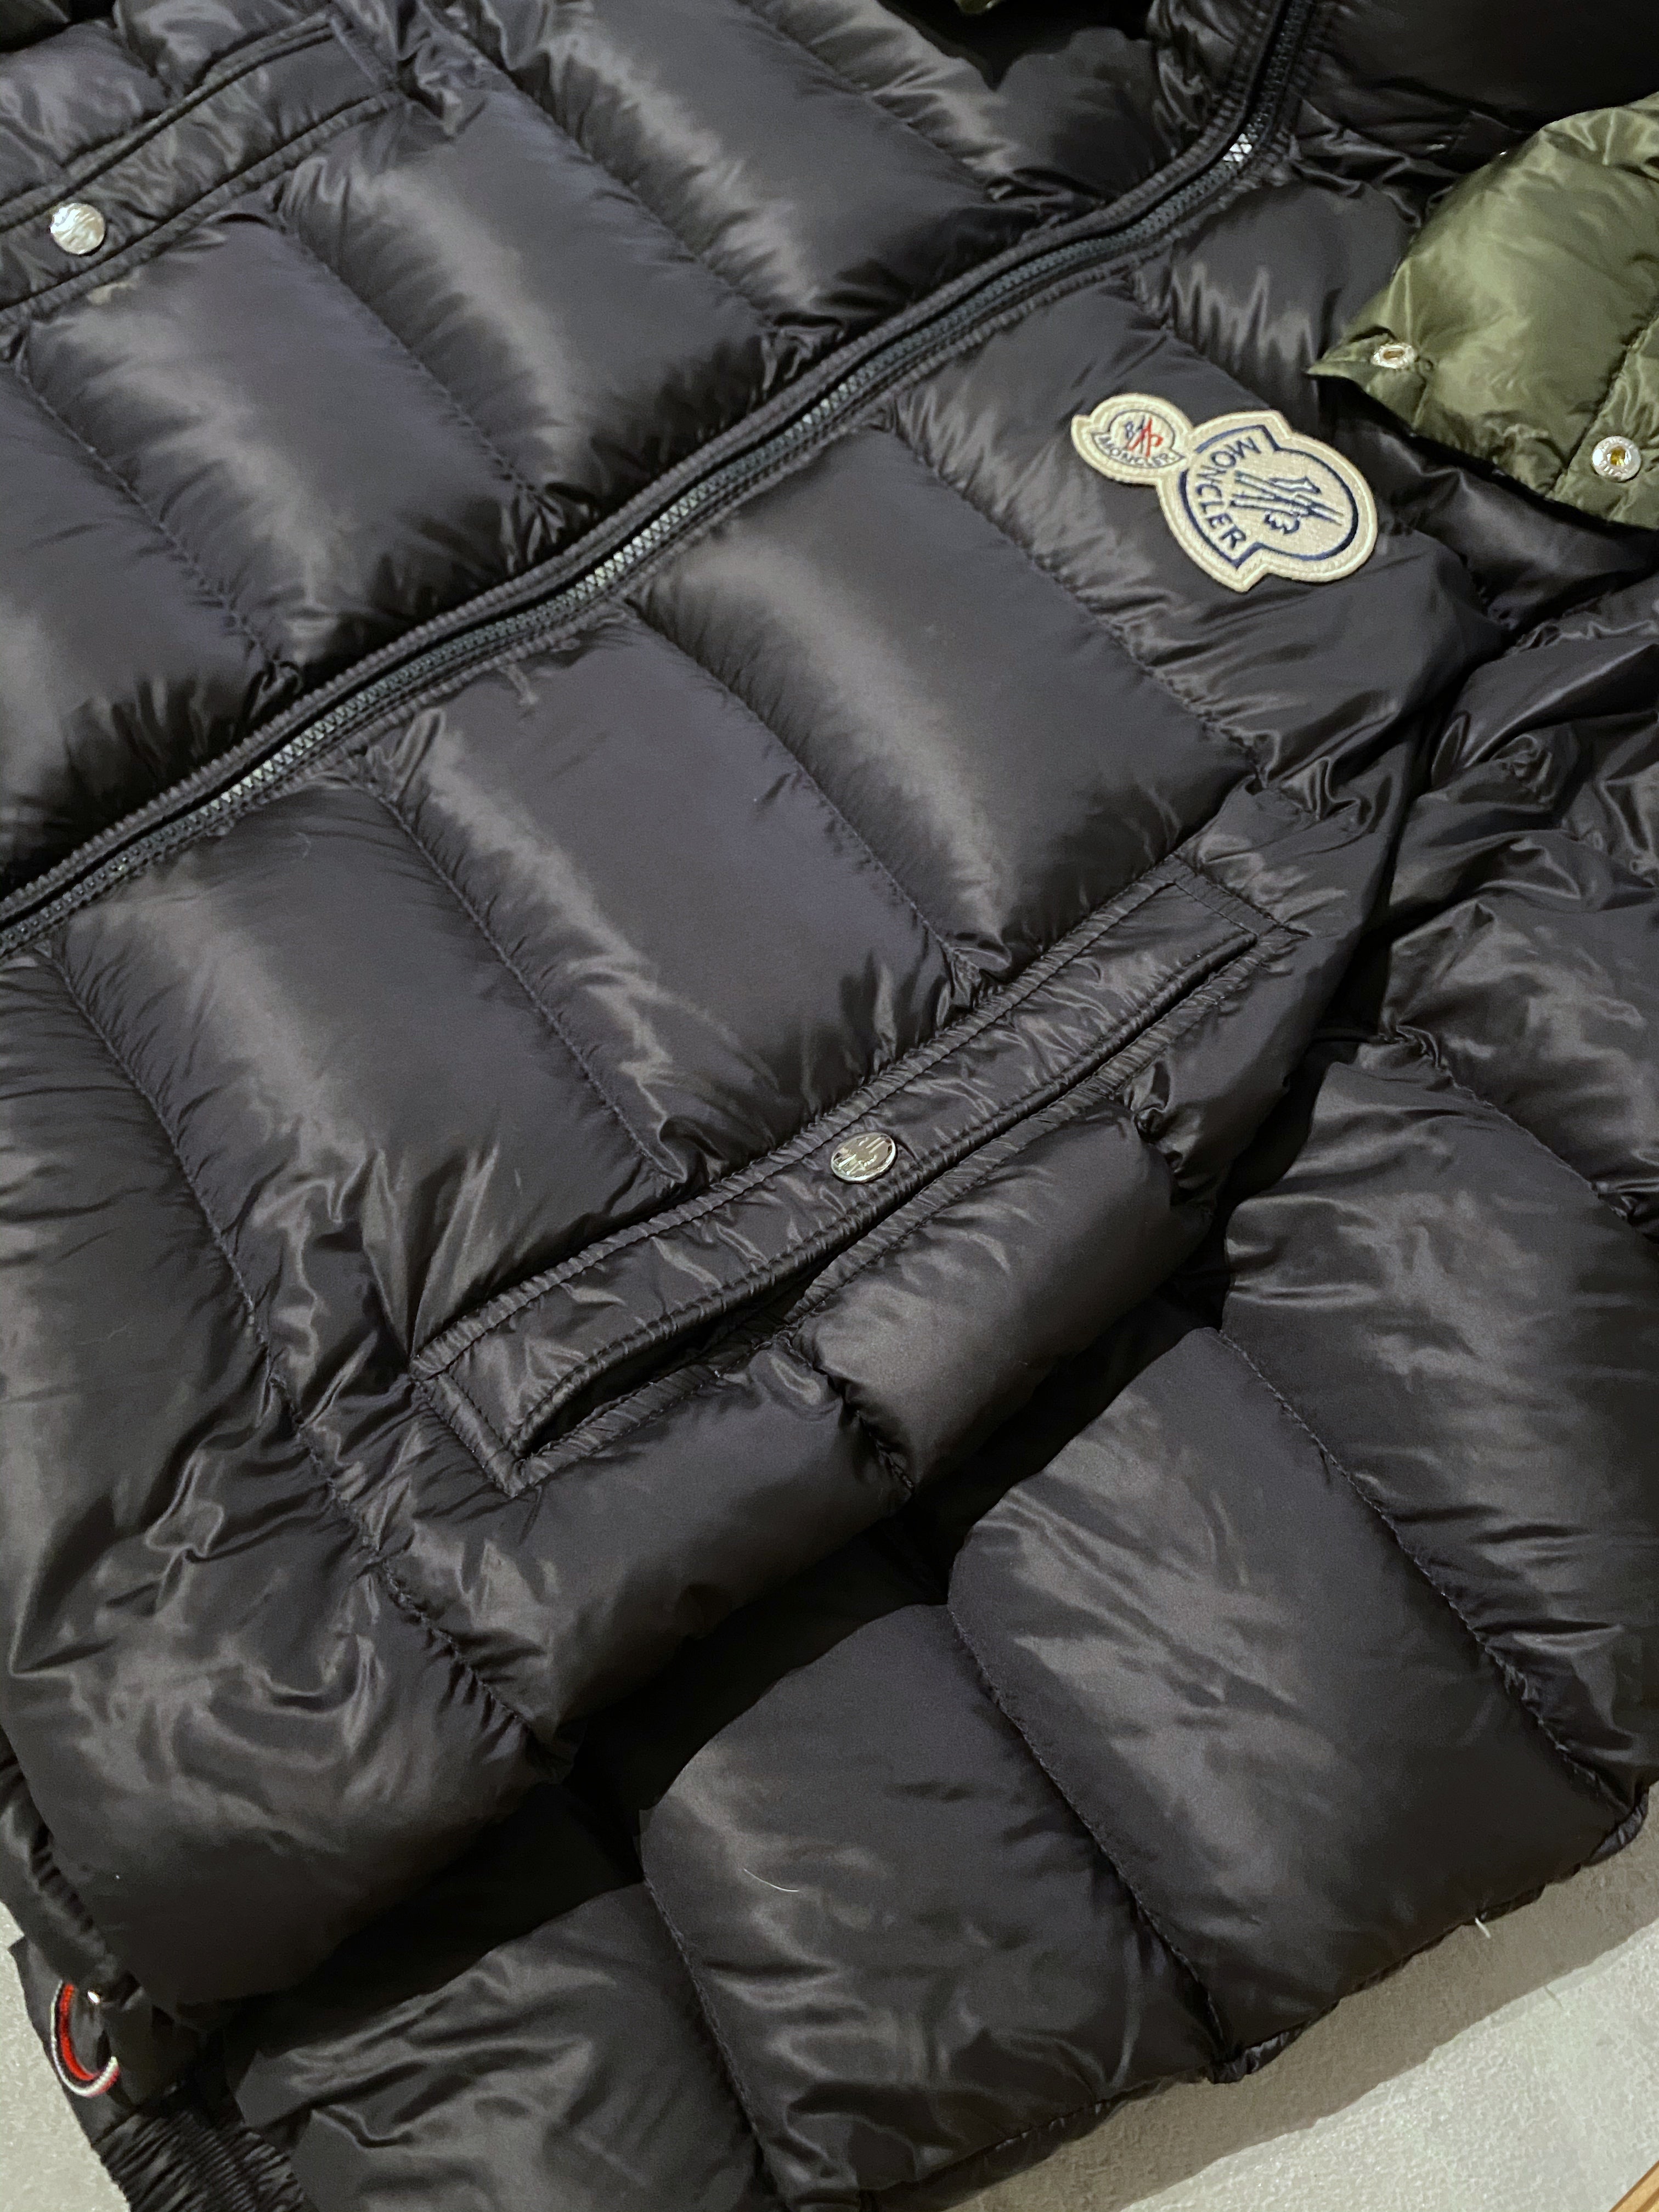 Moncler Bramant Jacket - Size 3